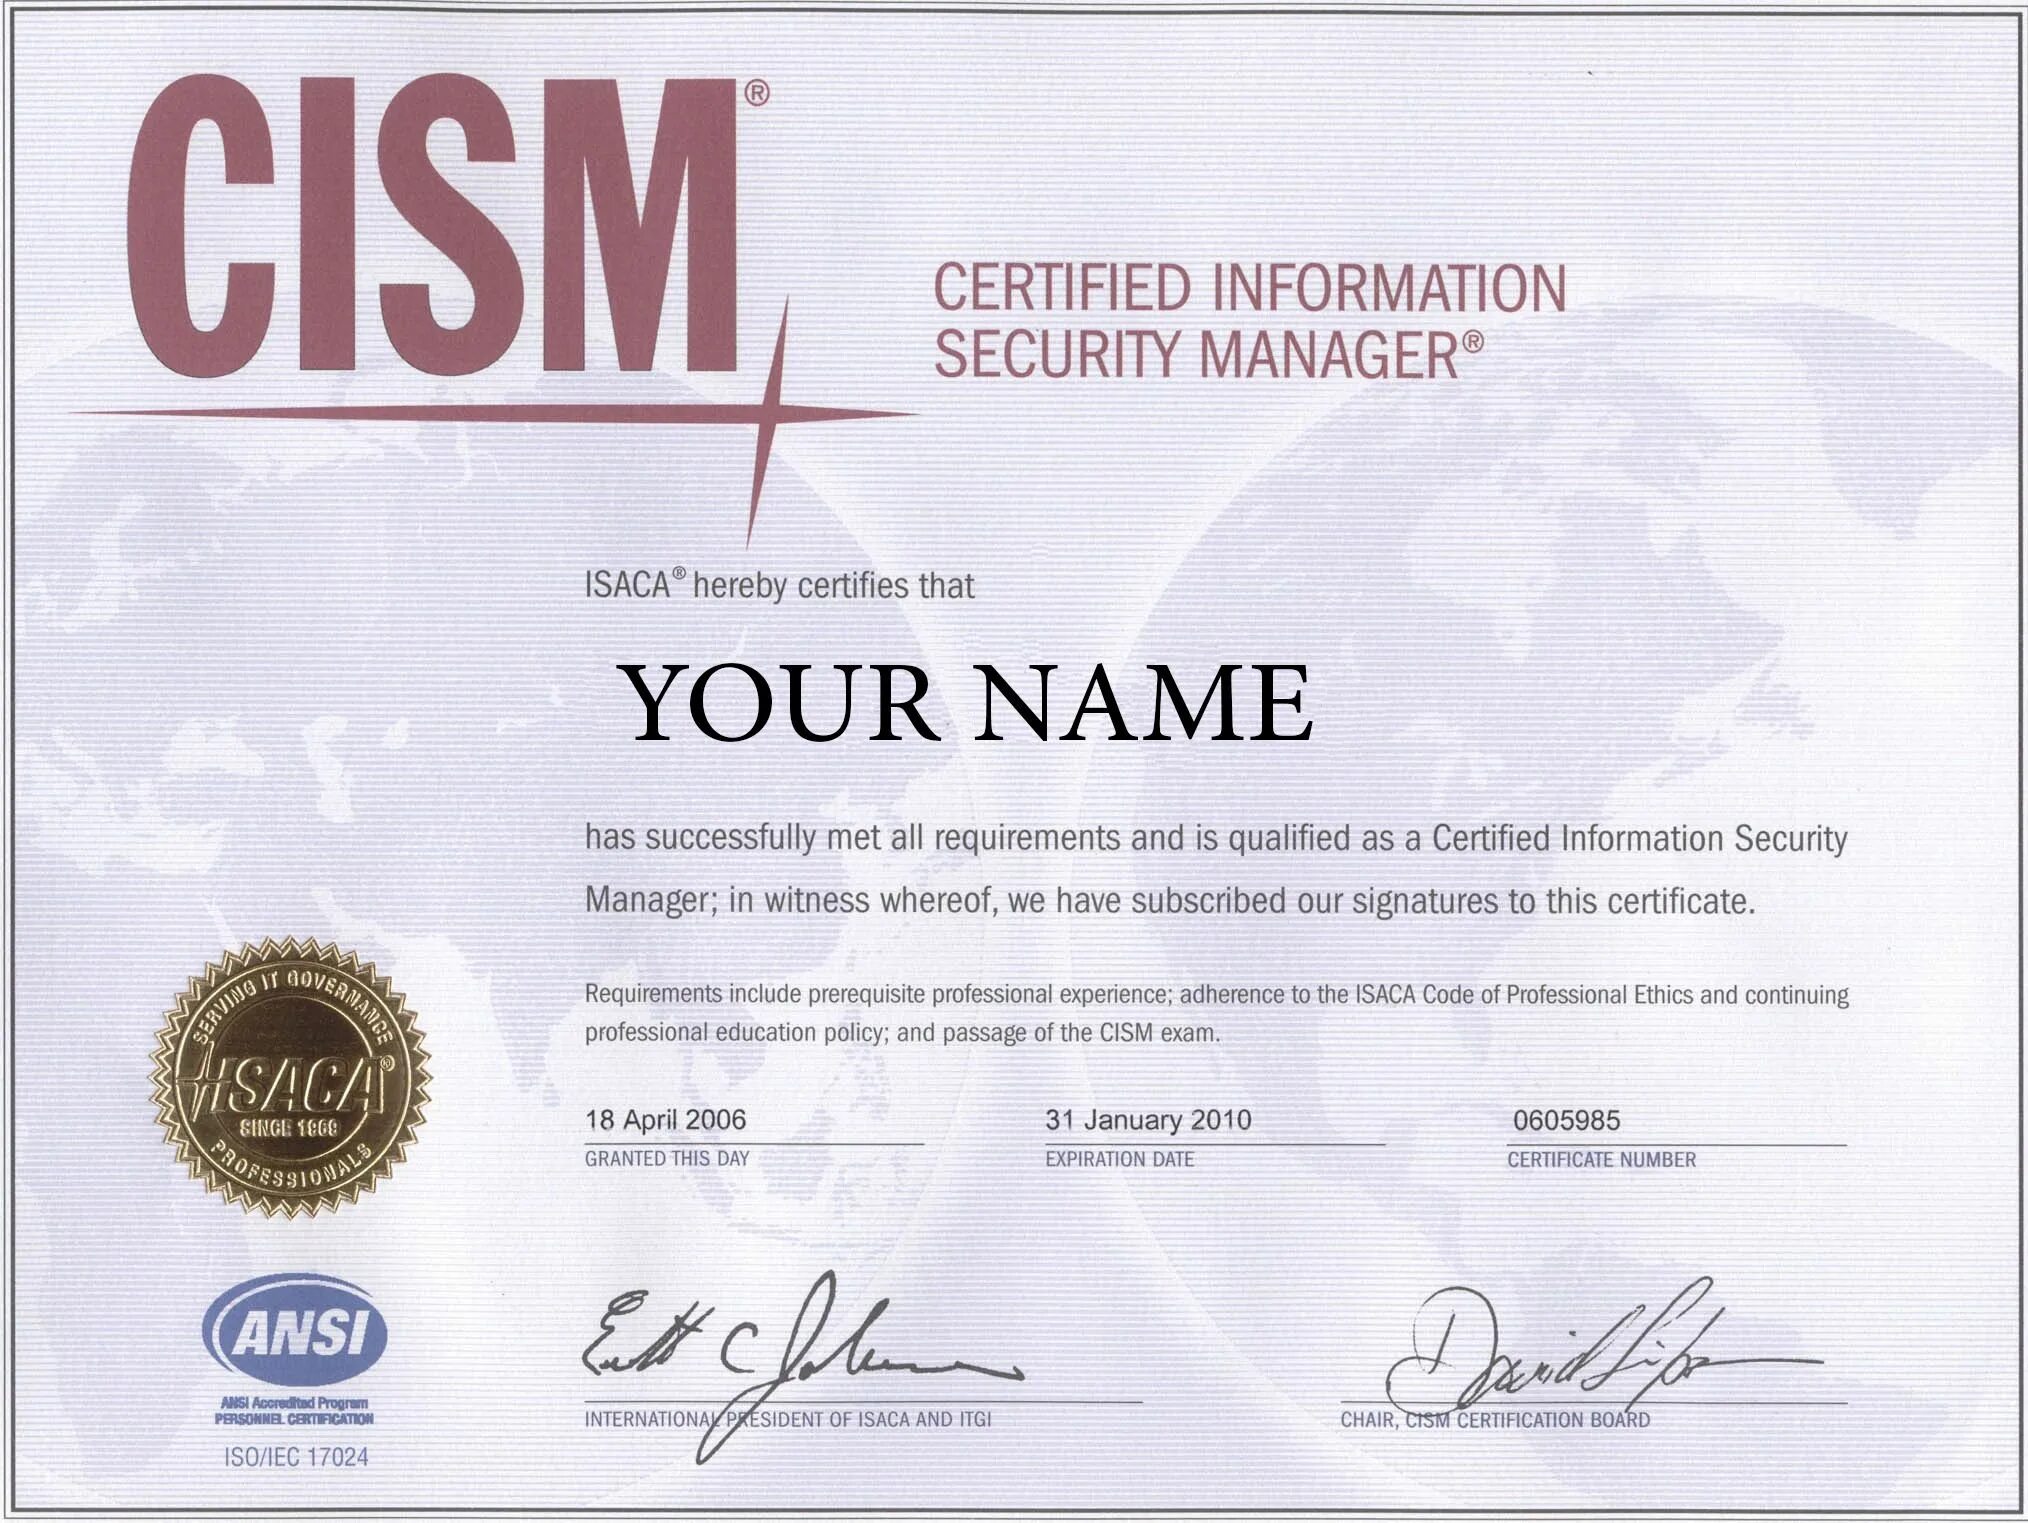 CISM certified. CISSP сертификат. CISM (certified information Security Manager). Cisa сертификат.